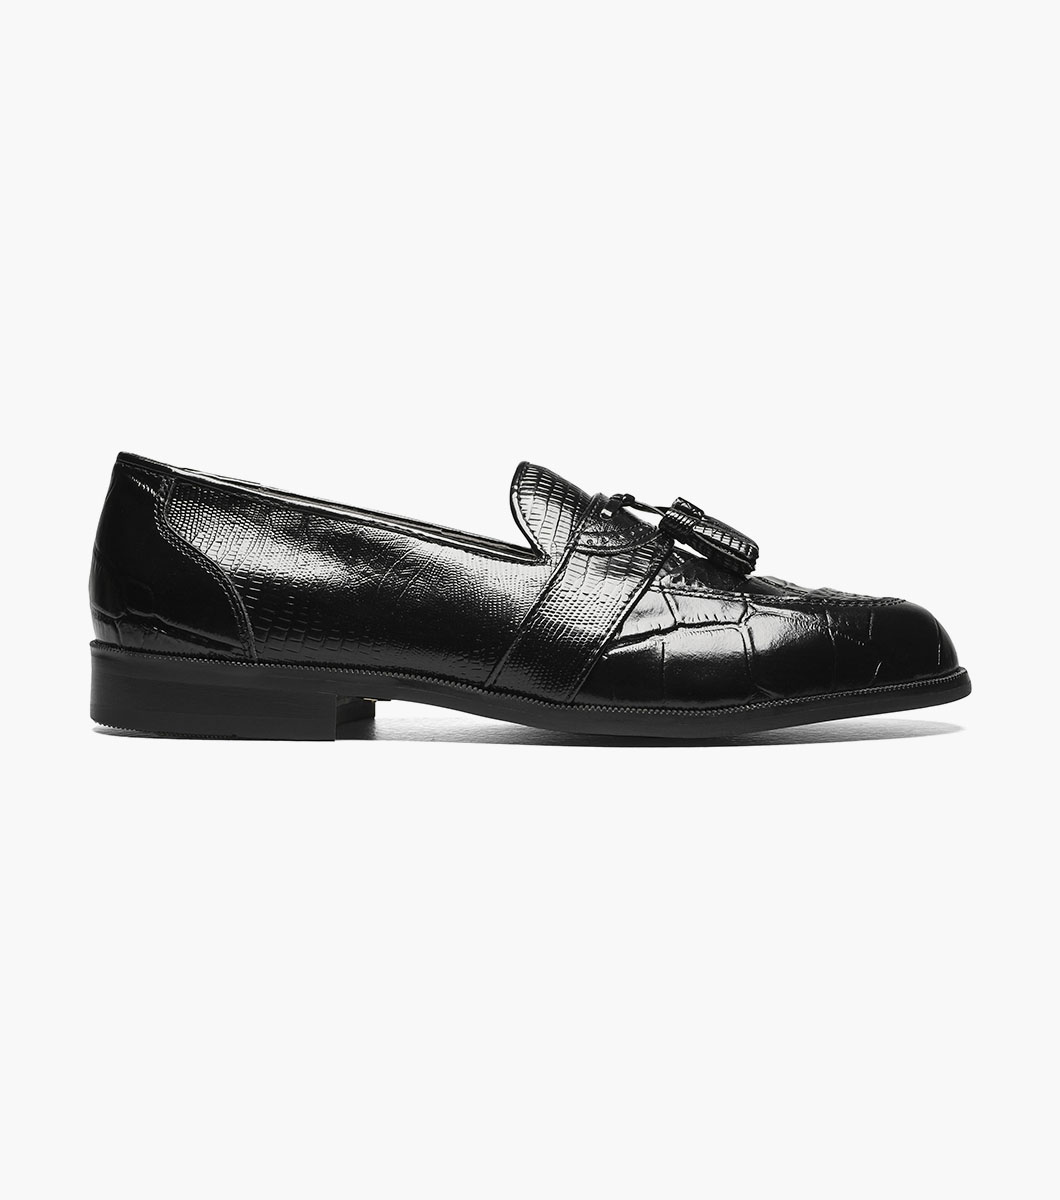 Men's Dress Shoes | Black Moc Toe Tassel Loafer | Stacy Adams Santana